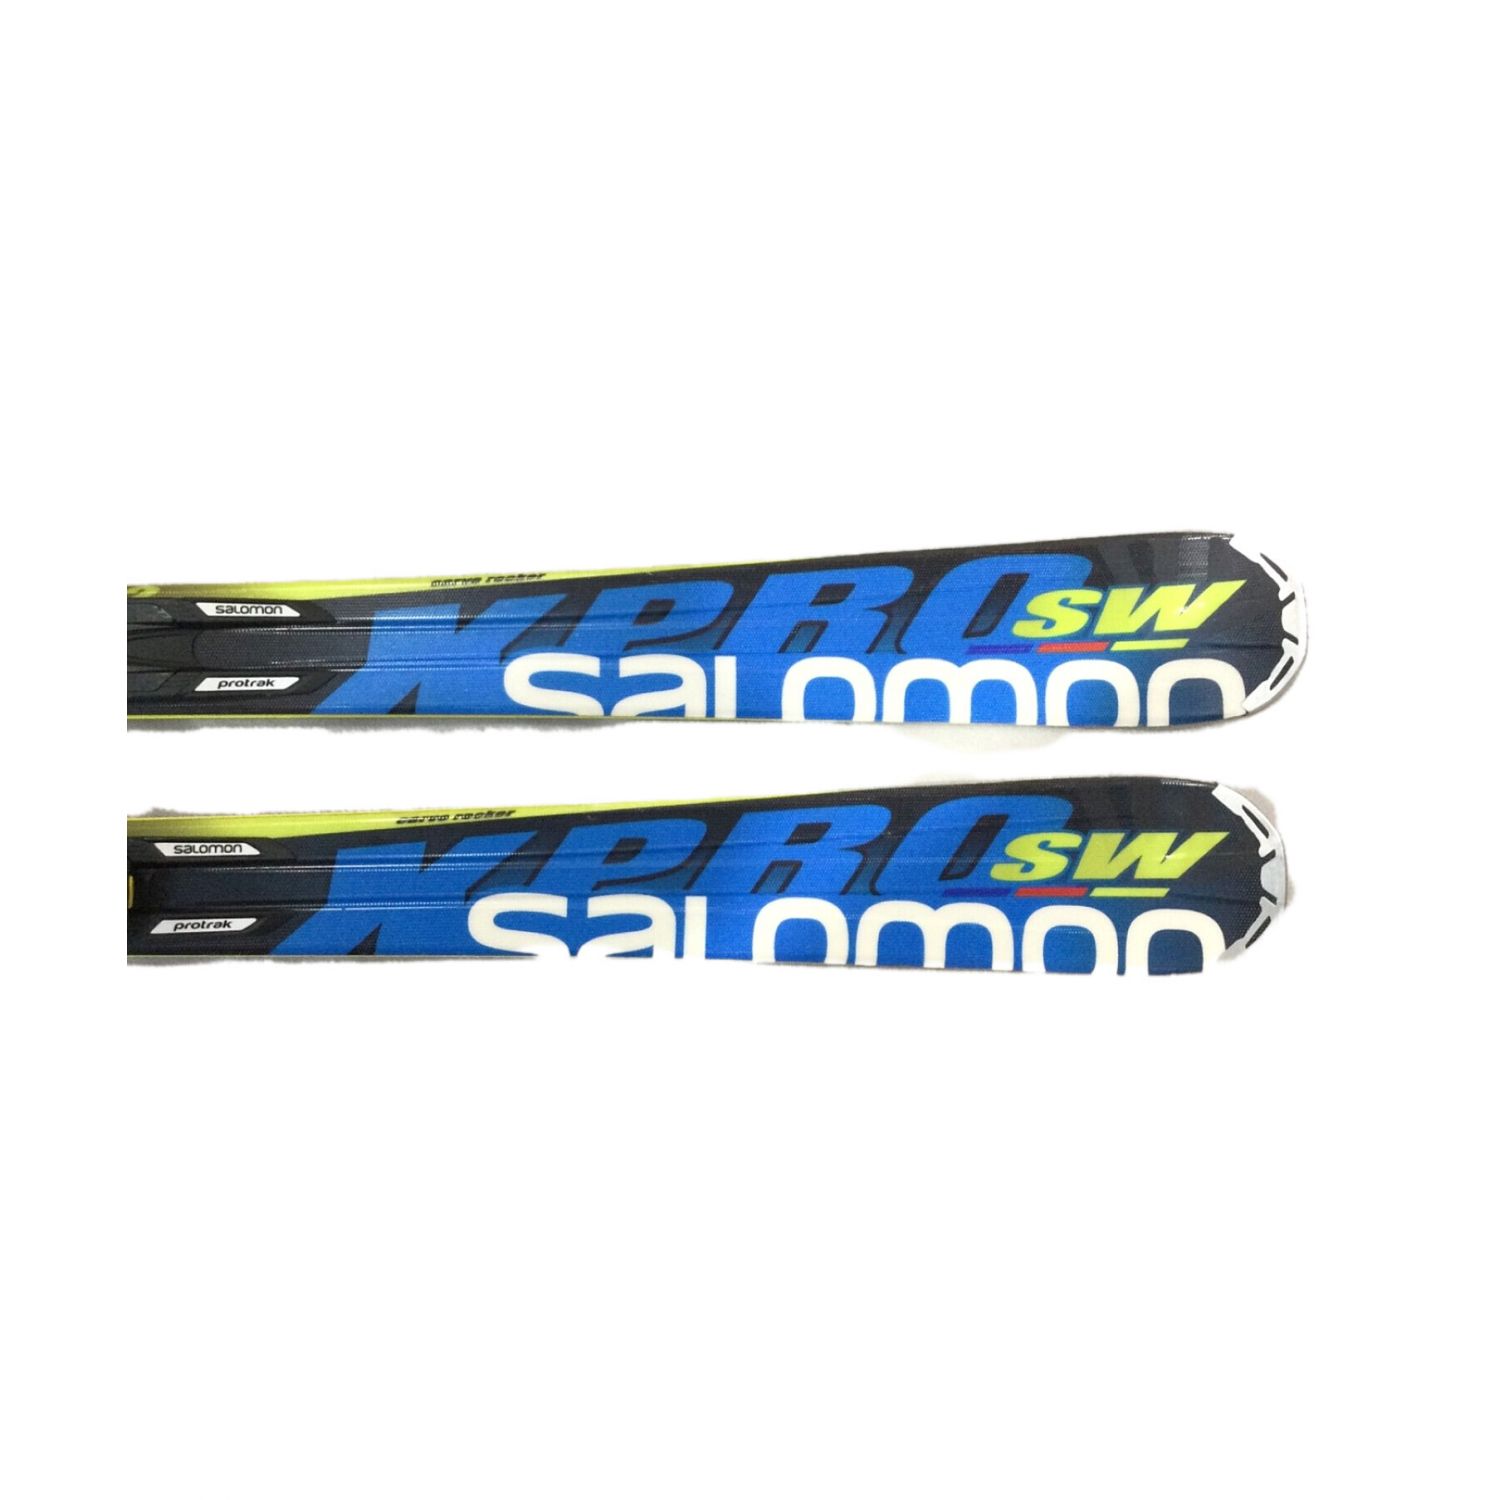 NCN【美品】SALOMON XPRO SW 162cm  スキー板